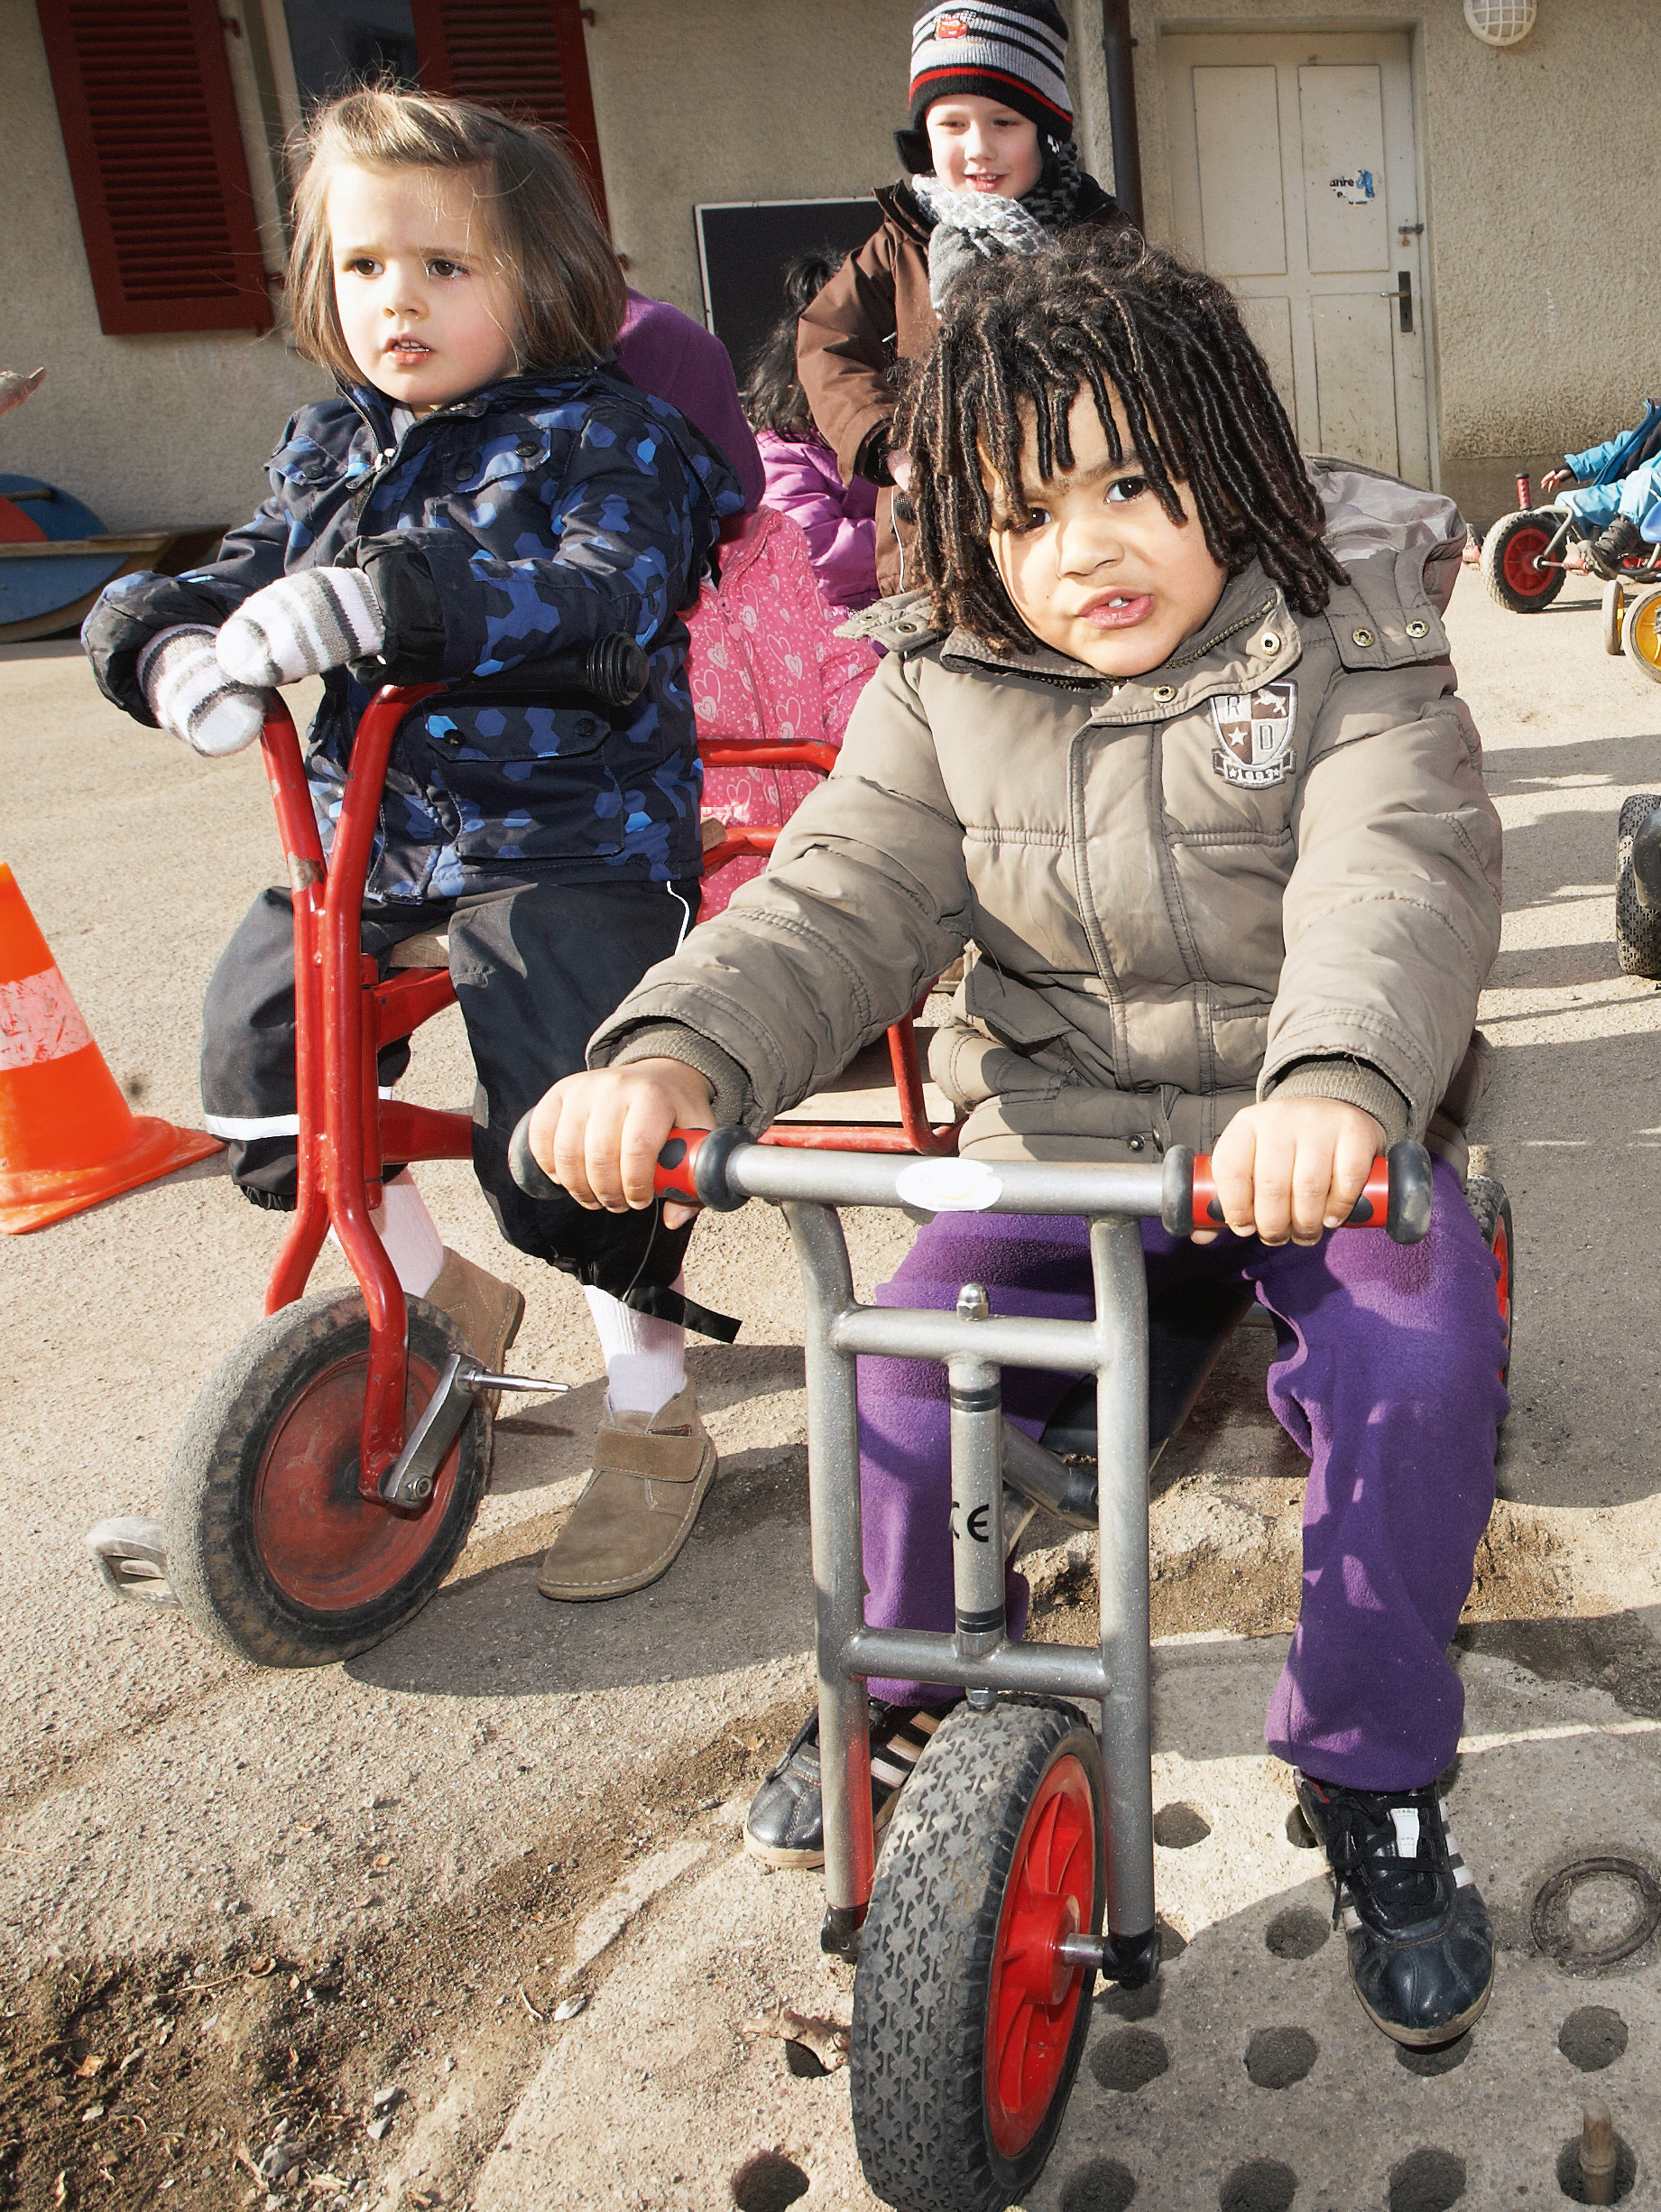 Kinder auf Fahrrad